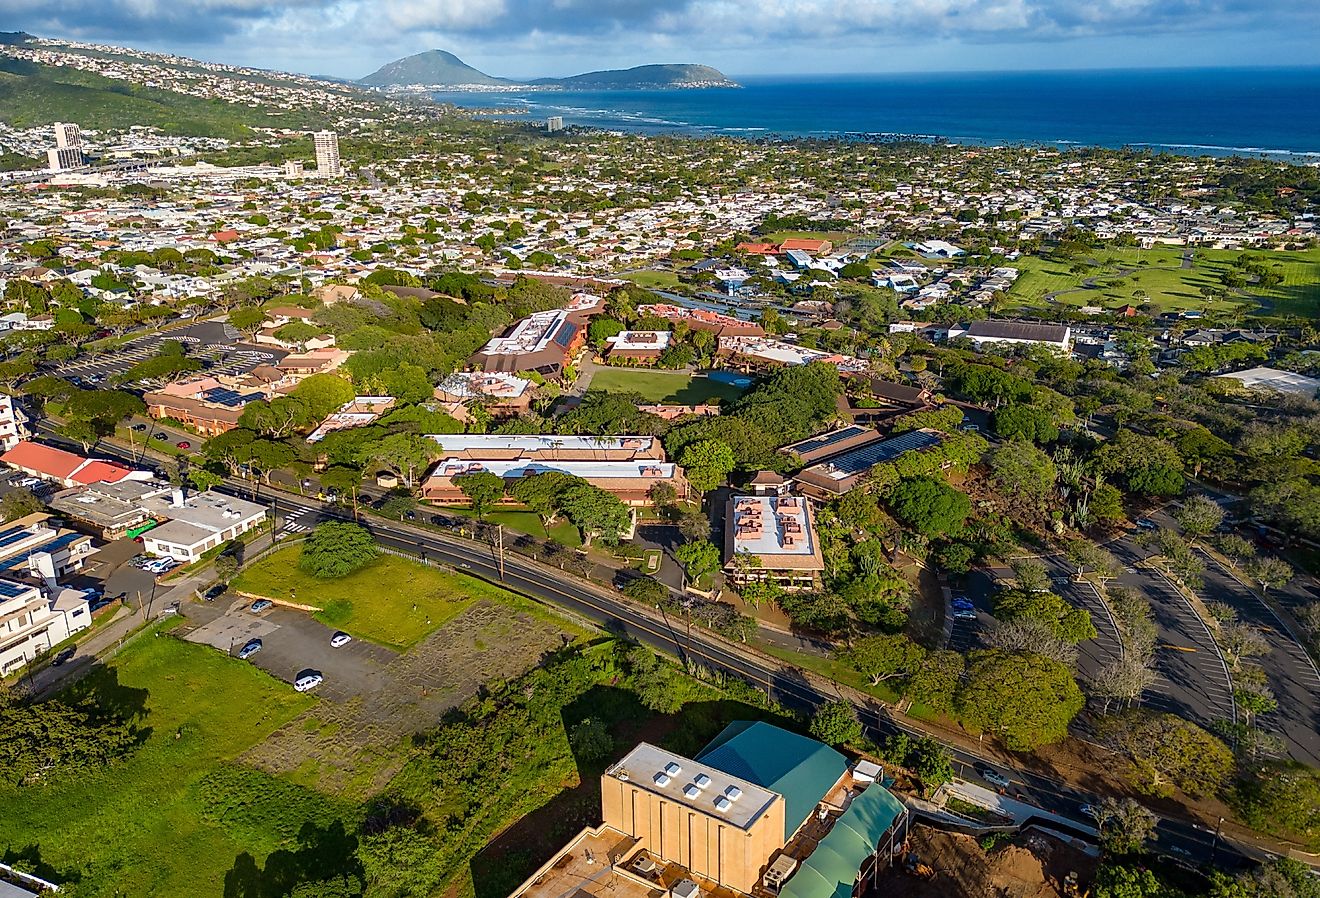 Overlooking Kapi'olani Community College in Honolulu, Hawaii.